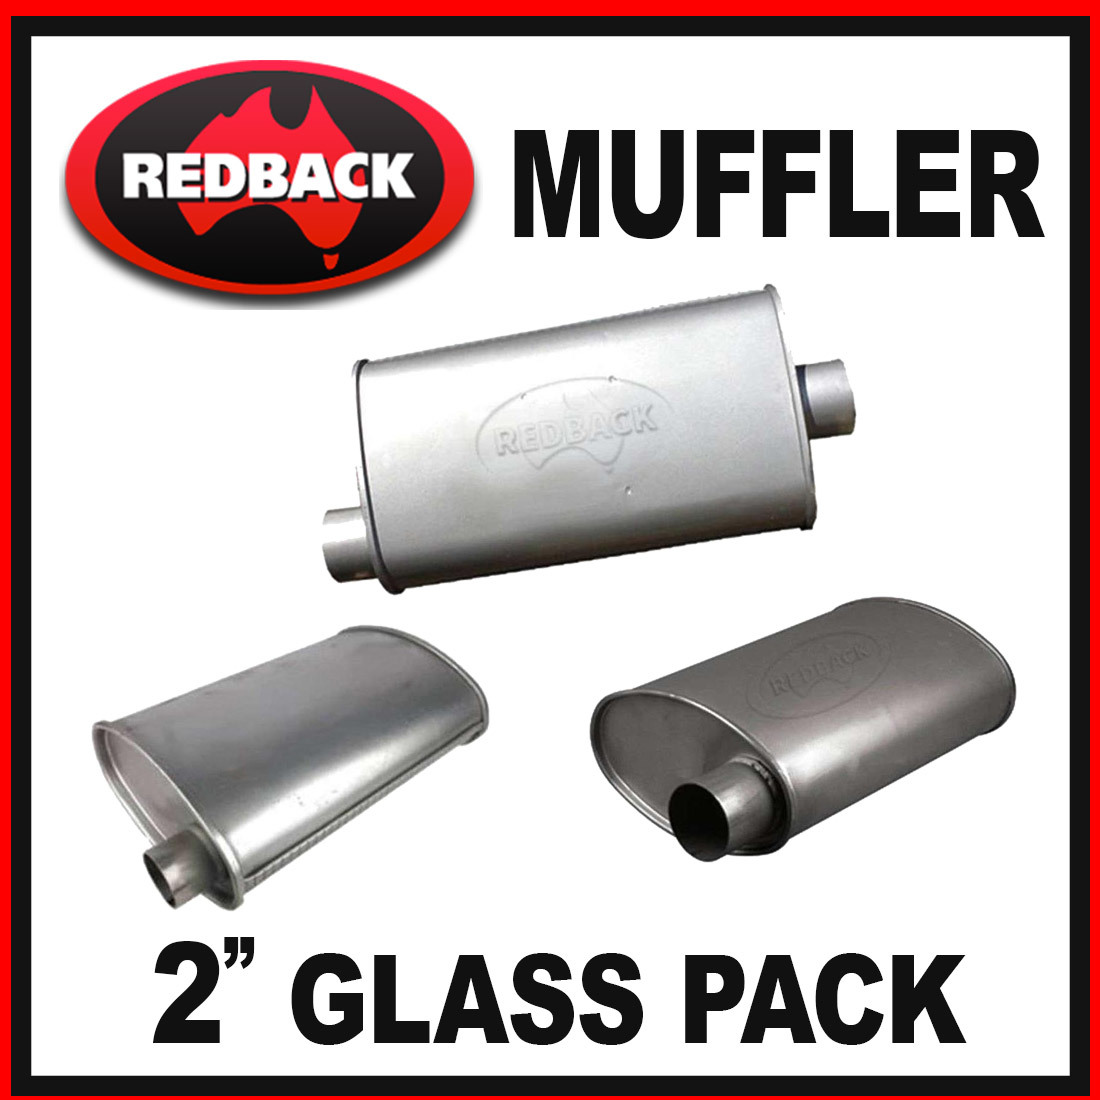 Redback 2" Glass Pack Muffler image